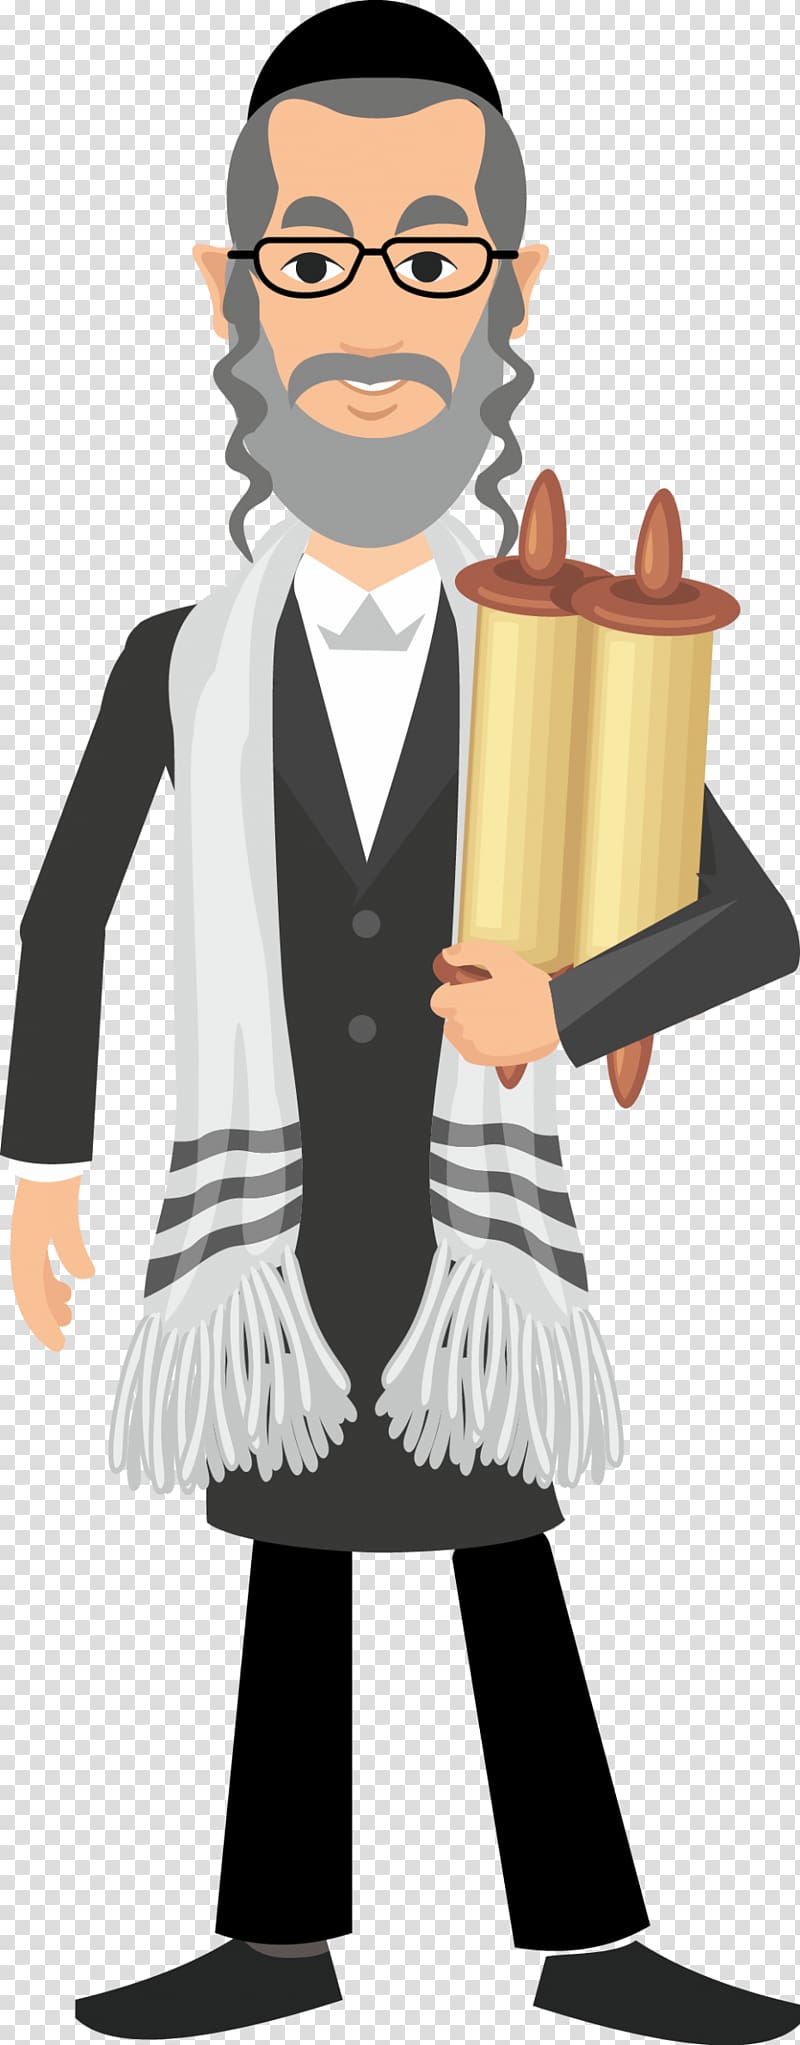 Orthodox Judaism Jewish people Rabbi Torah, Judaism